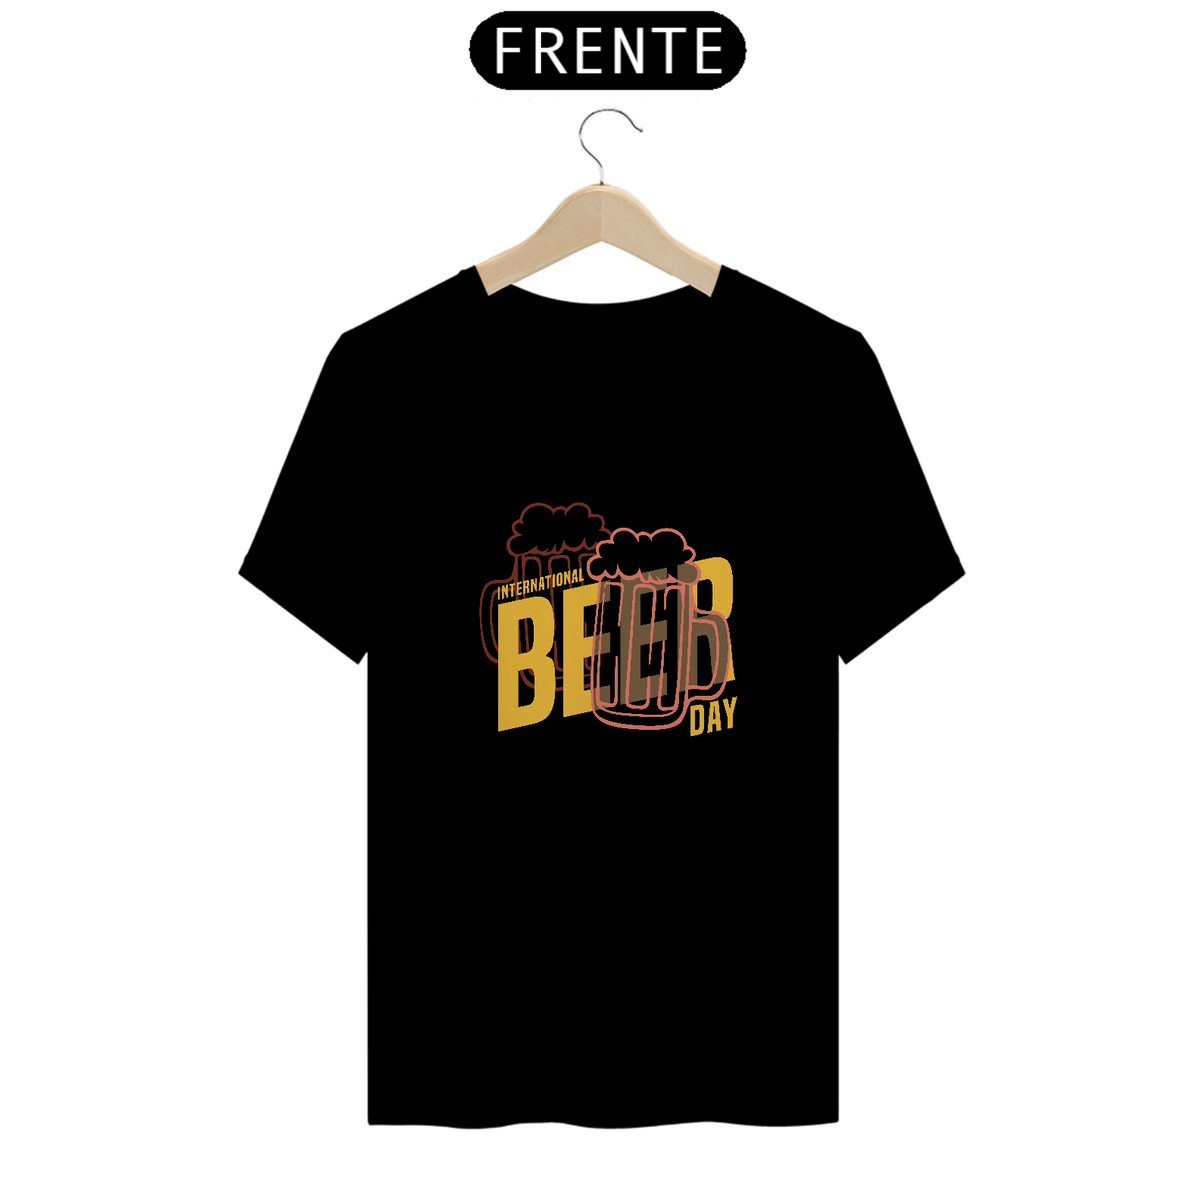 Nome do produto: Beer Day- tshirt